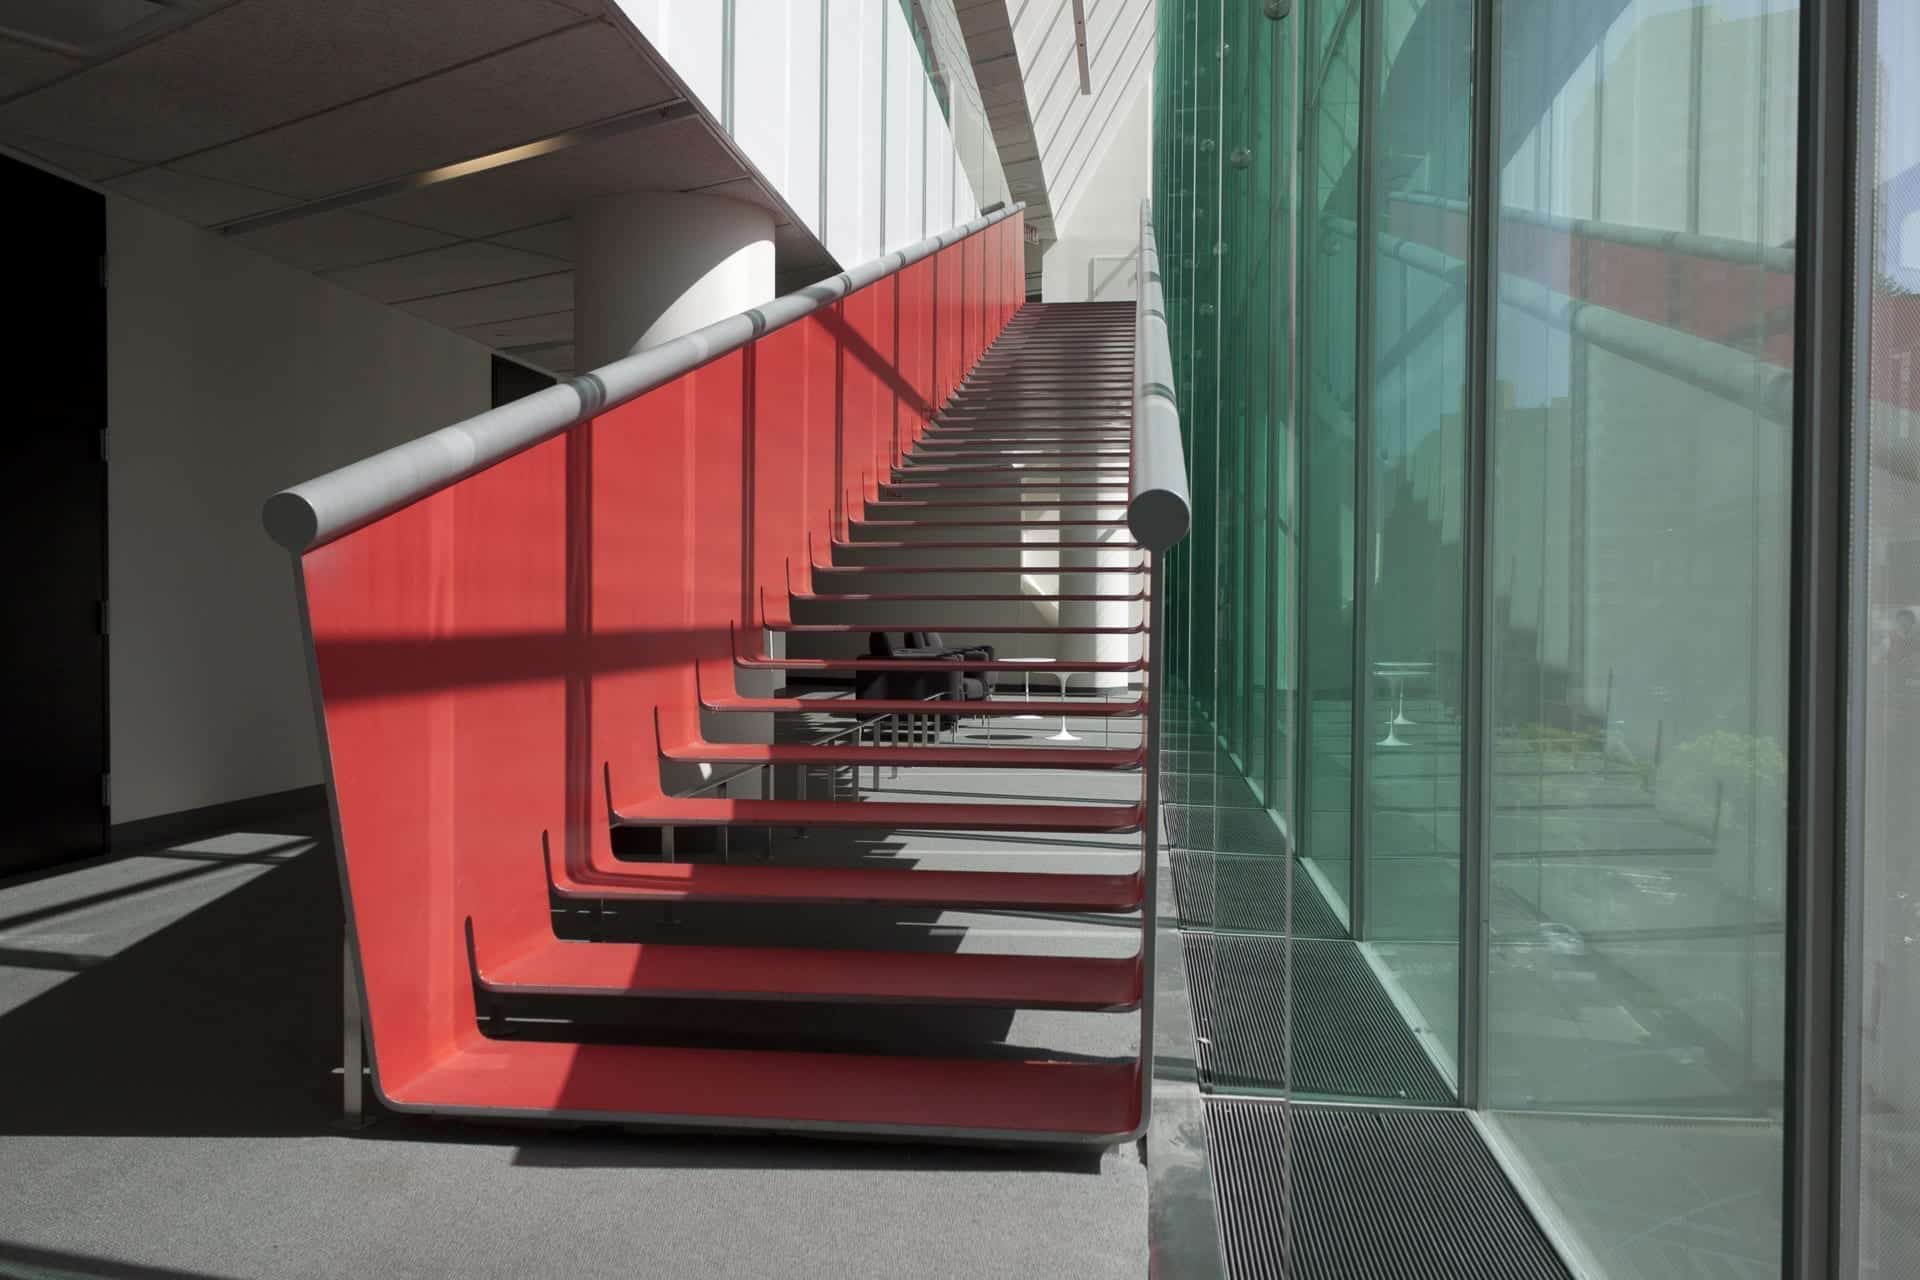 Juilliard Staircase designed by Diller Scofidio + Renfro.